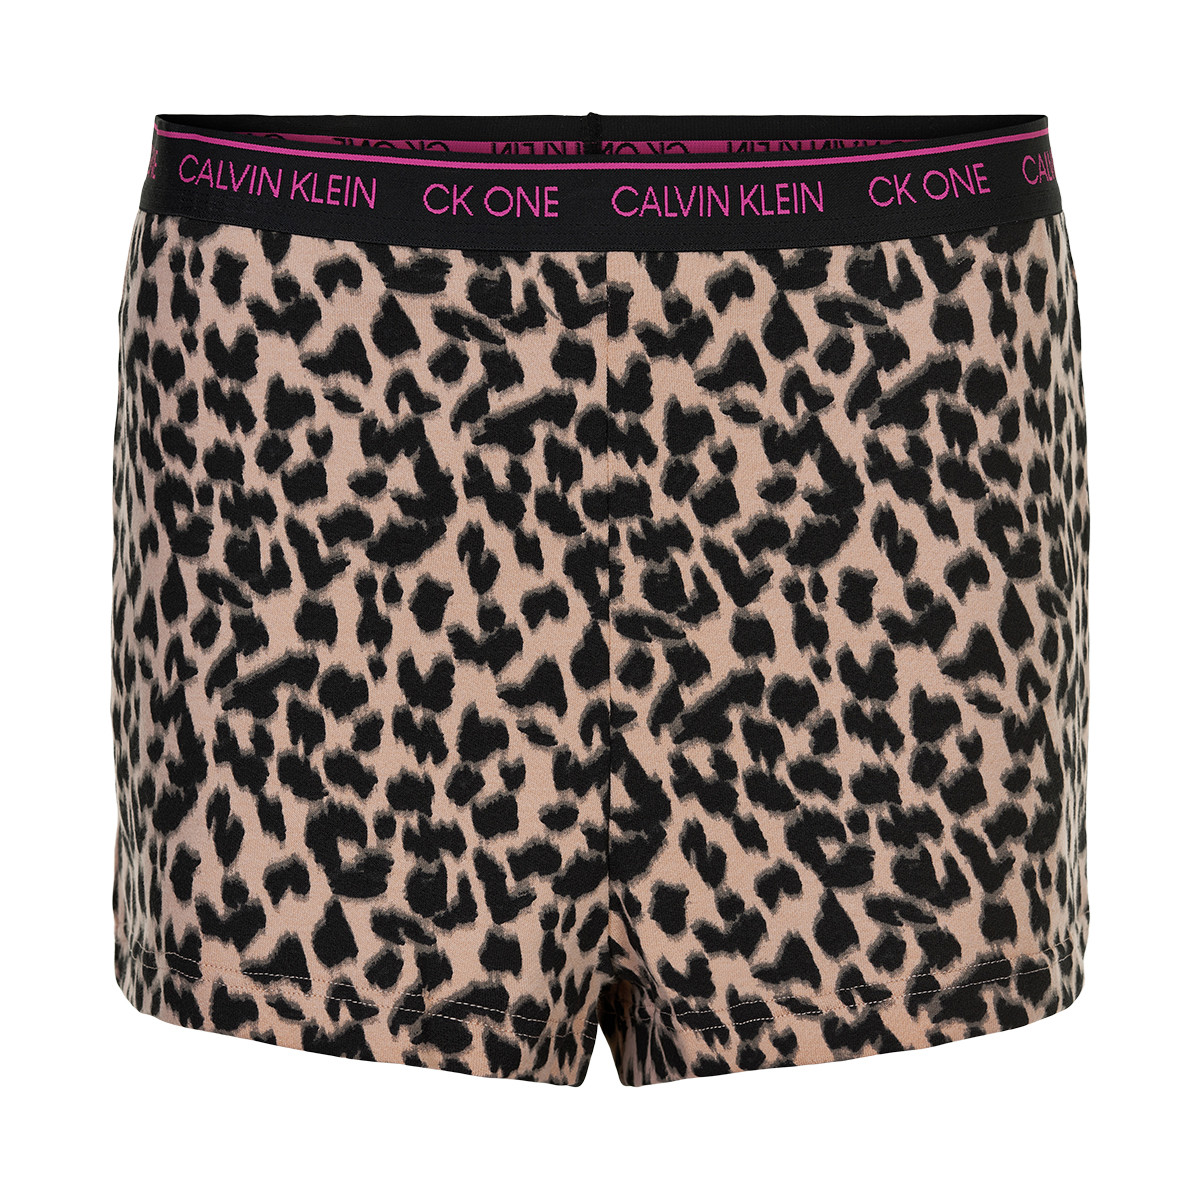 4: Calvin Klein Lingeri Shorts, Farve: Multicolor, Størrelse: XS, Dame